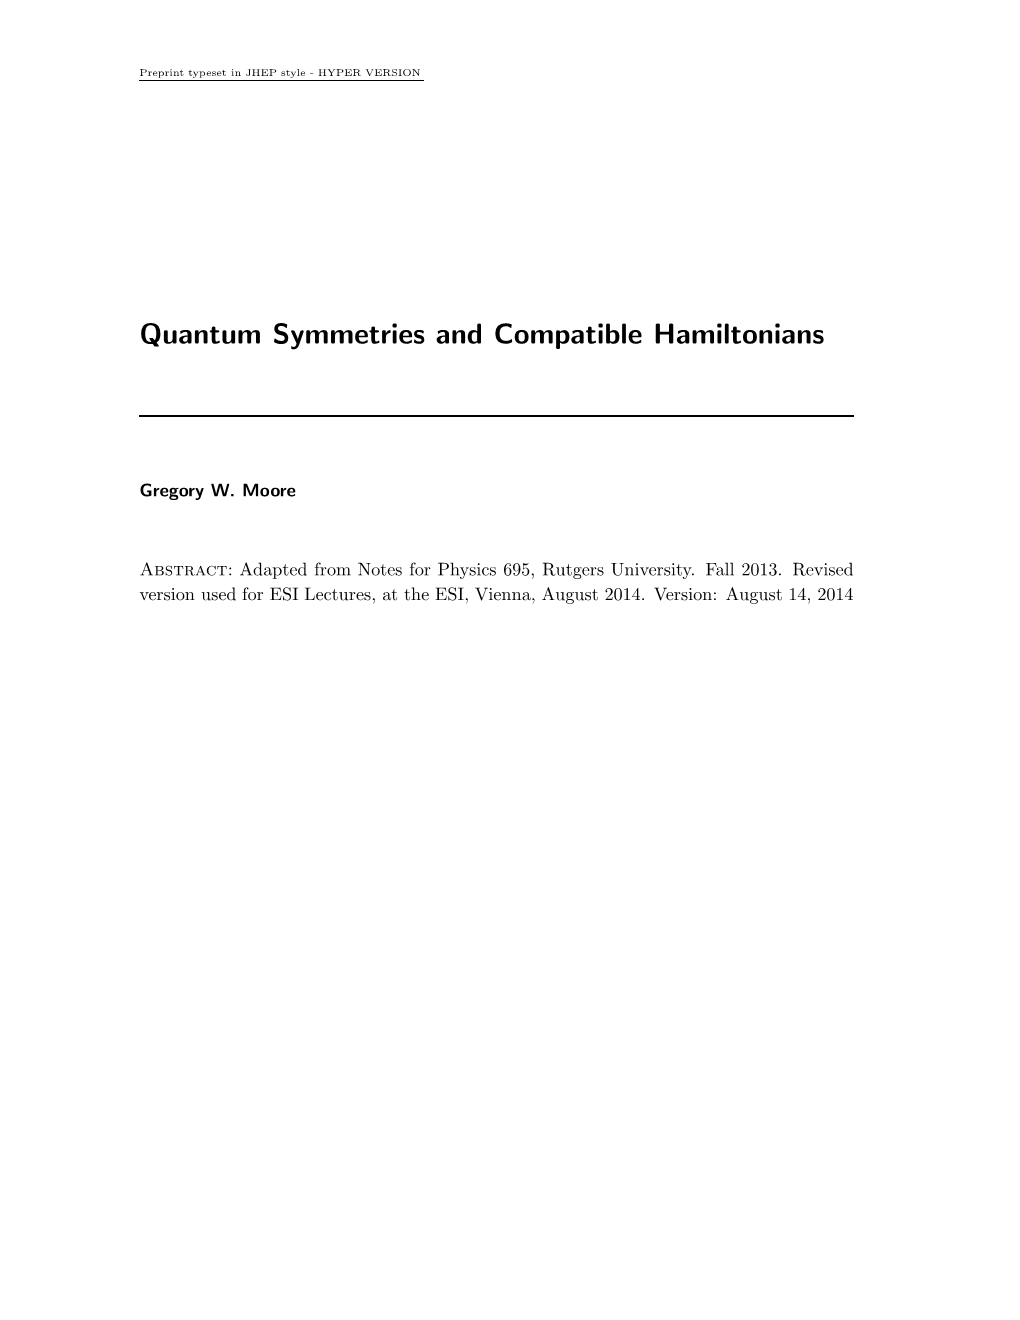 Quantum Symmetries and Compatible Hamiltonians